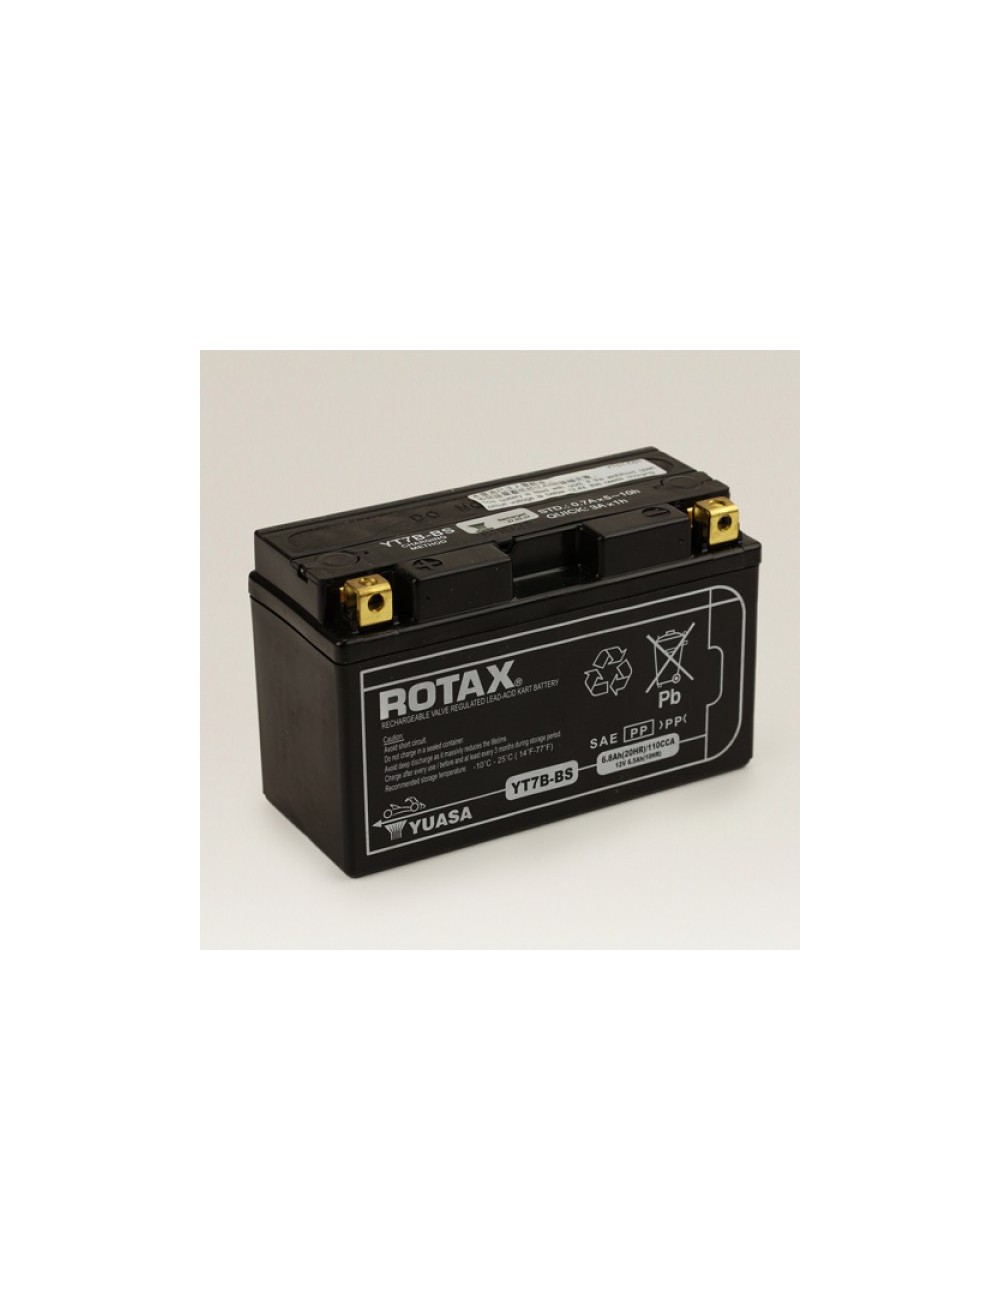 Rotax batterie YUASA 12V-6,5Ah avec pack 